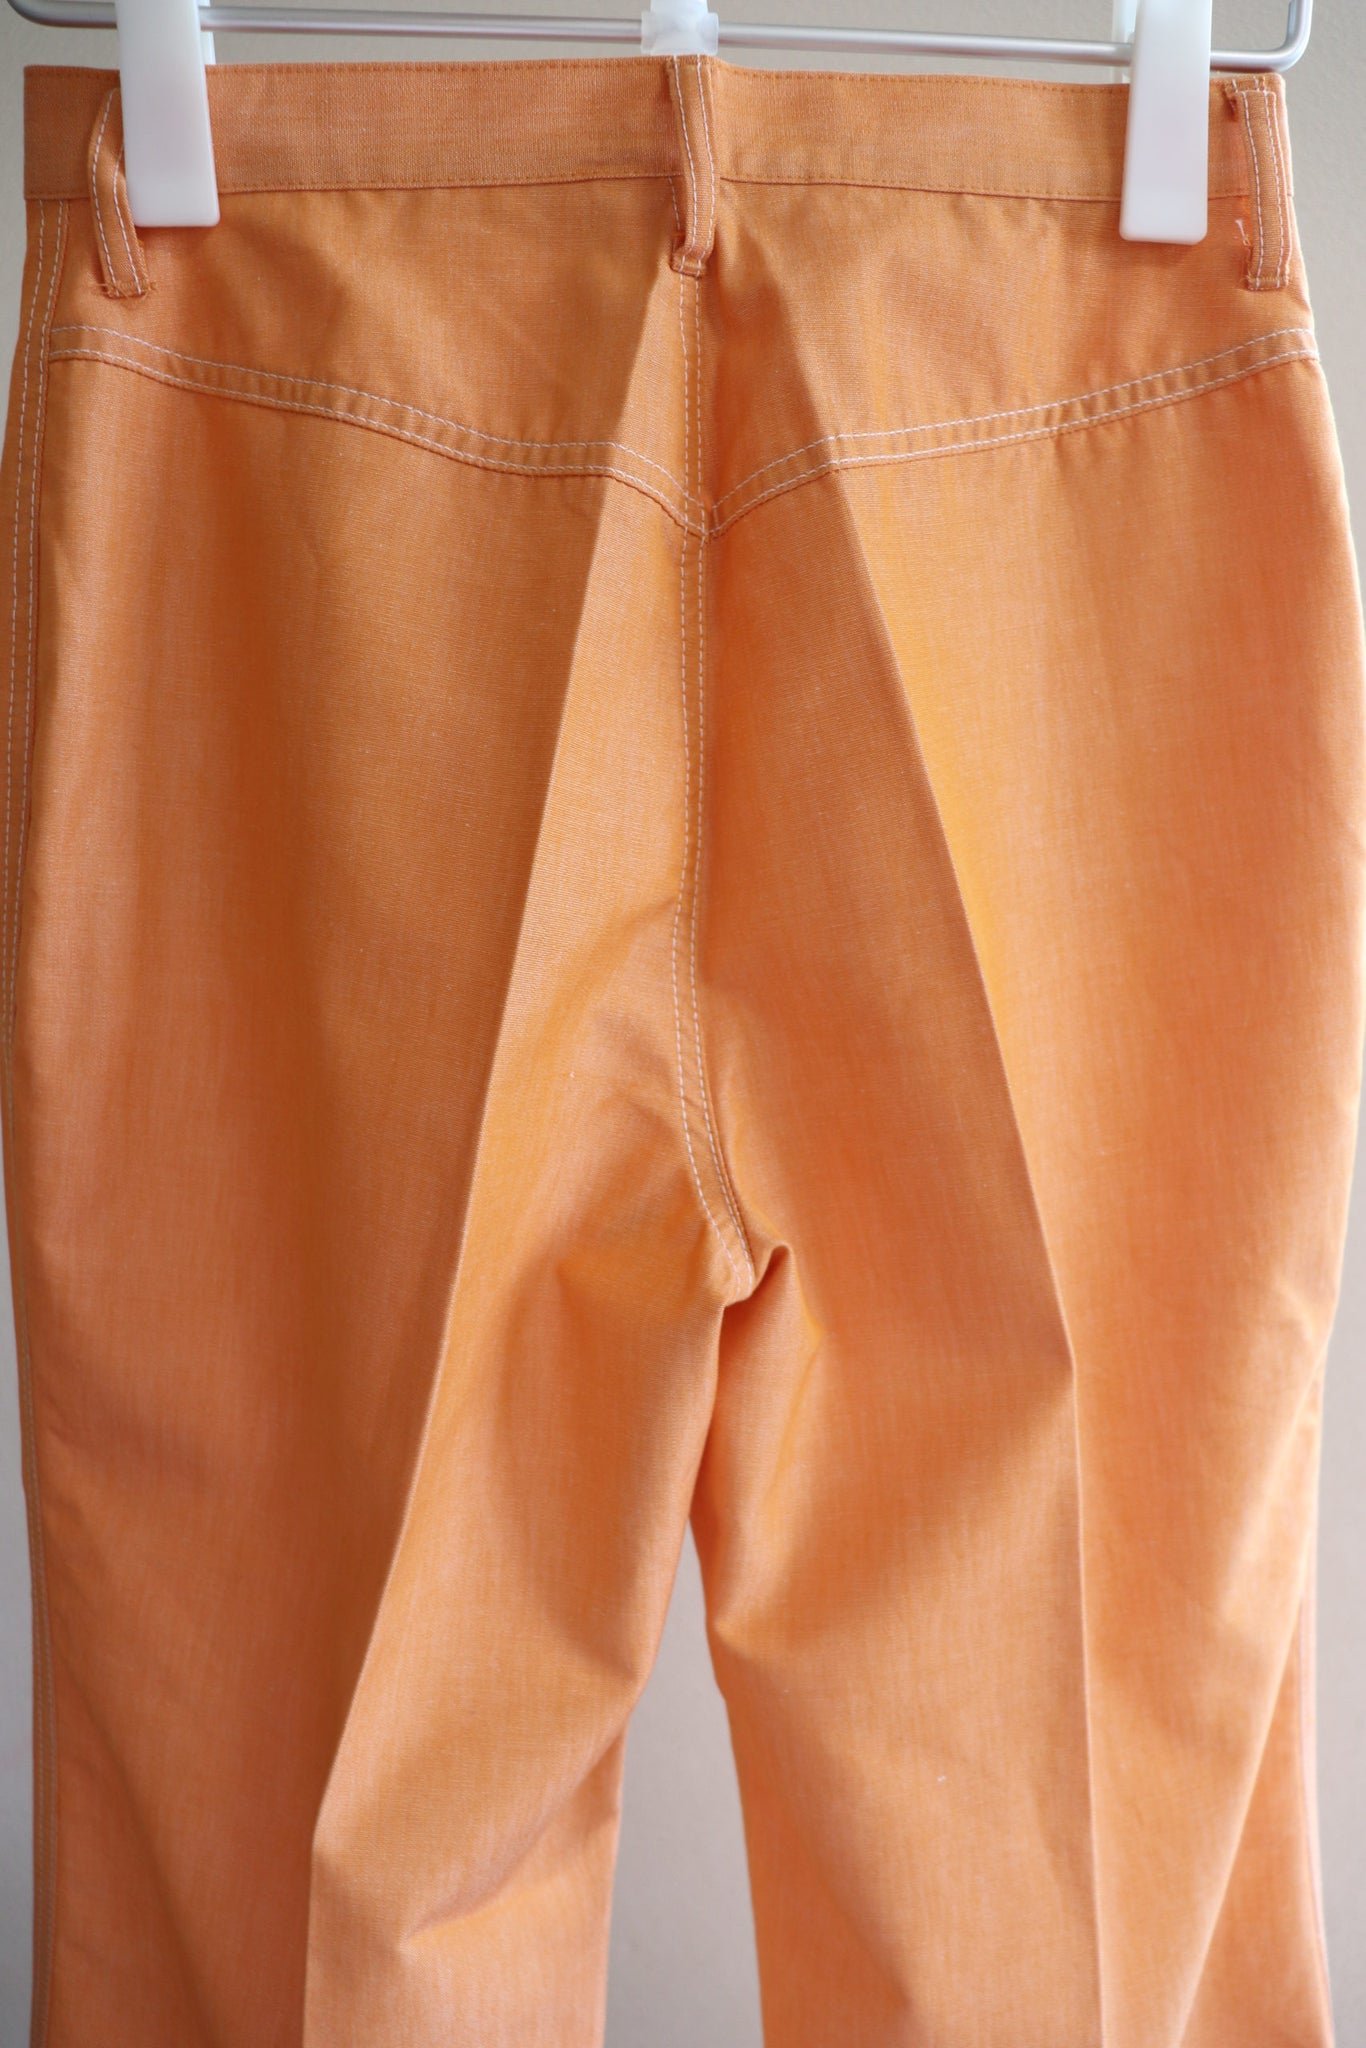 70s High Waist Orange Flares Pants